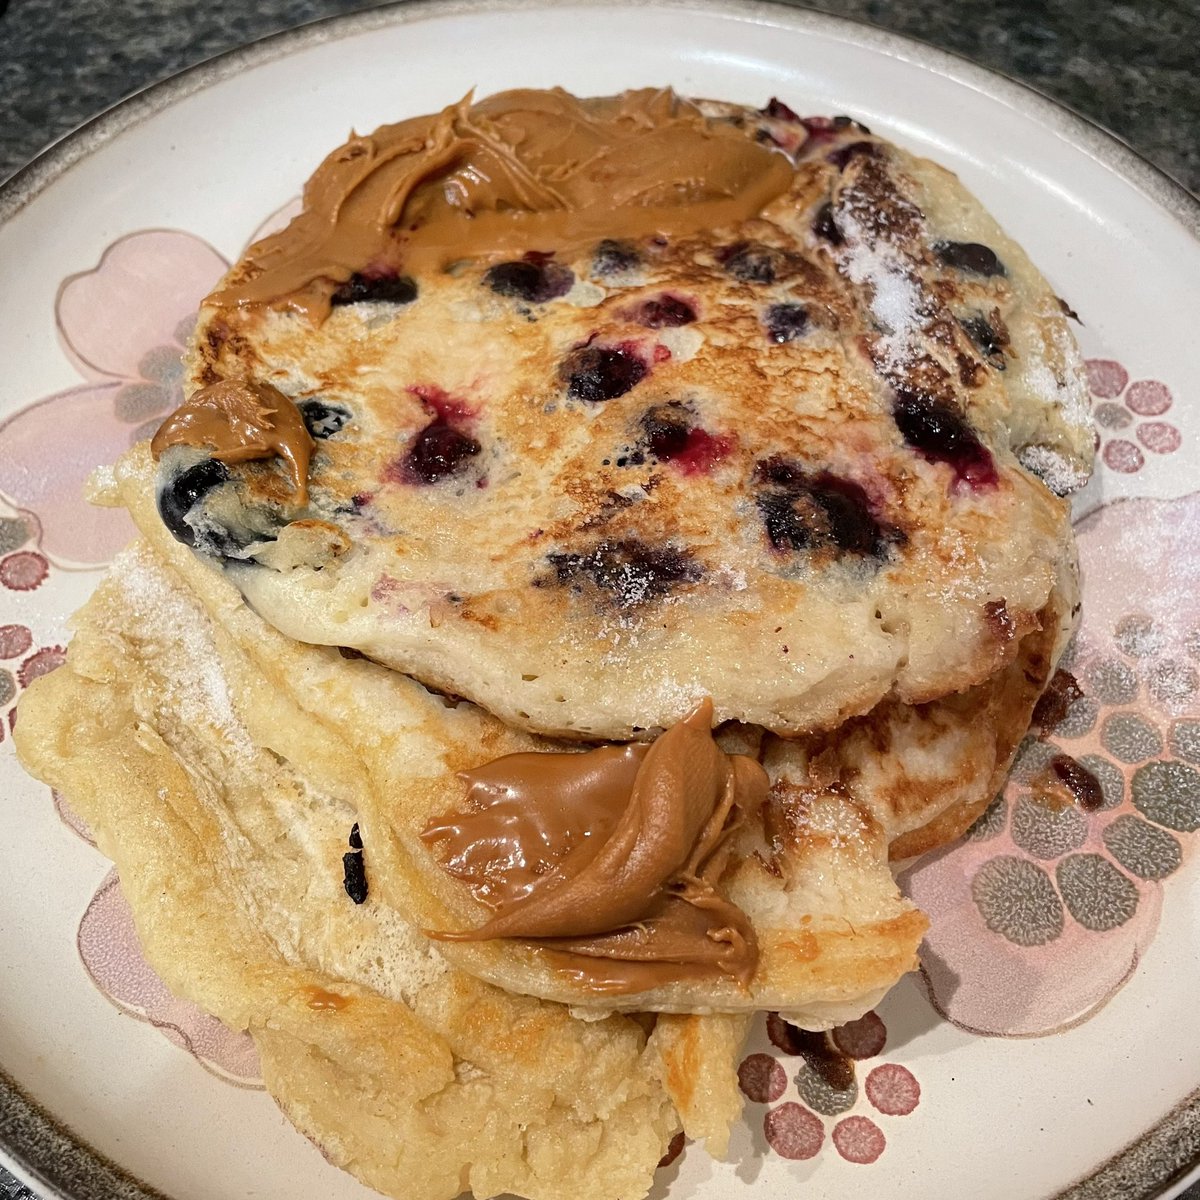 First 3 vegan pancakes. Blueberry, lemon juice & Biscoff spread 🥰 #vegan #ShroveTuesday